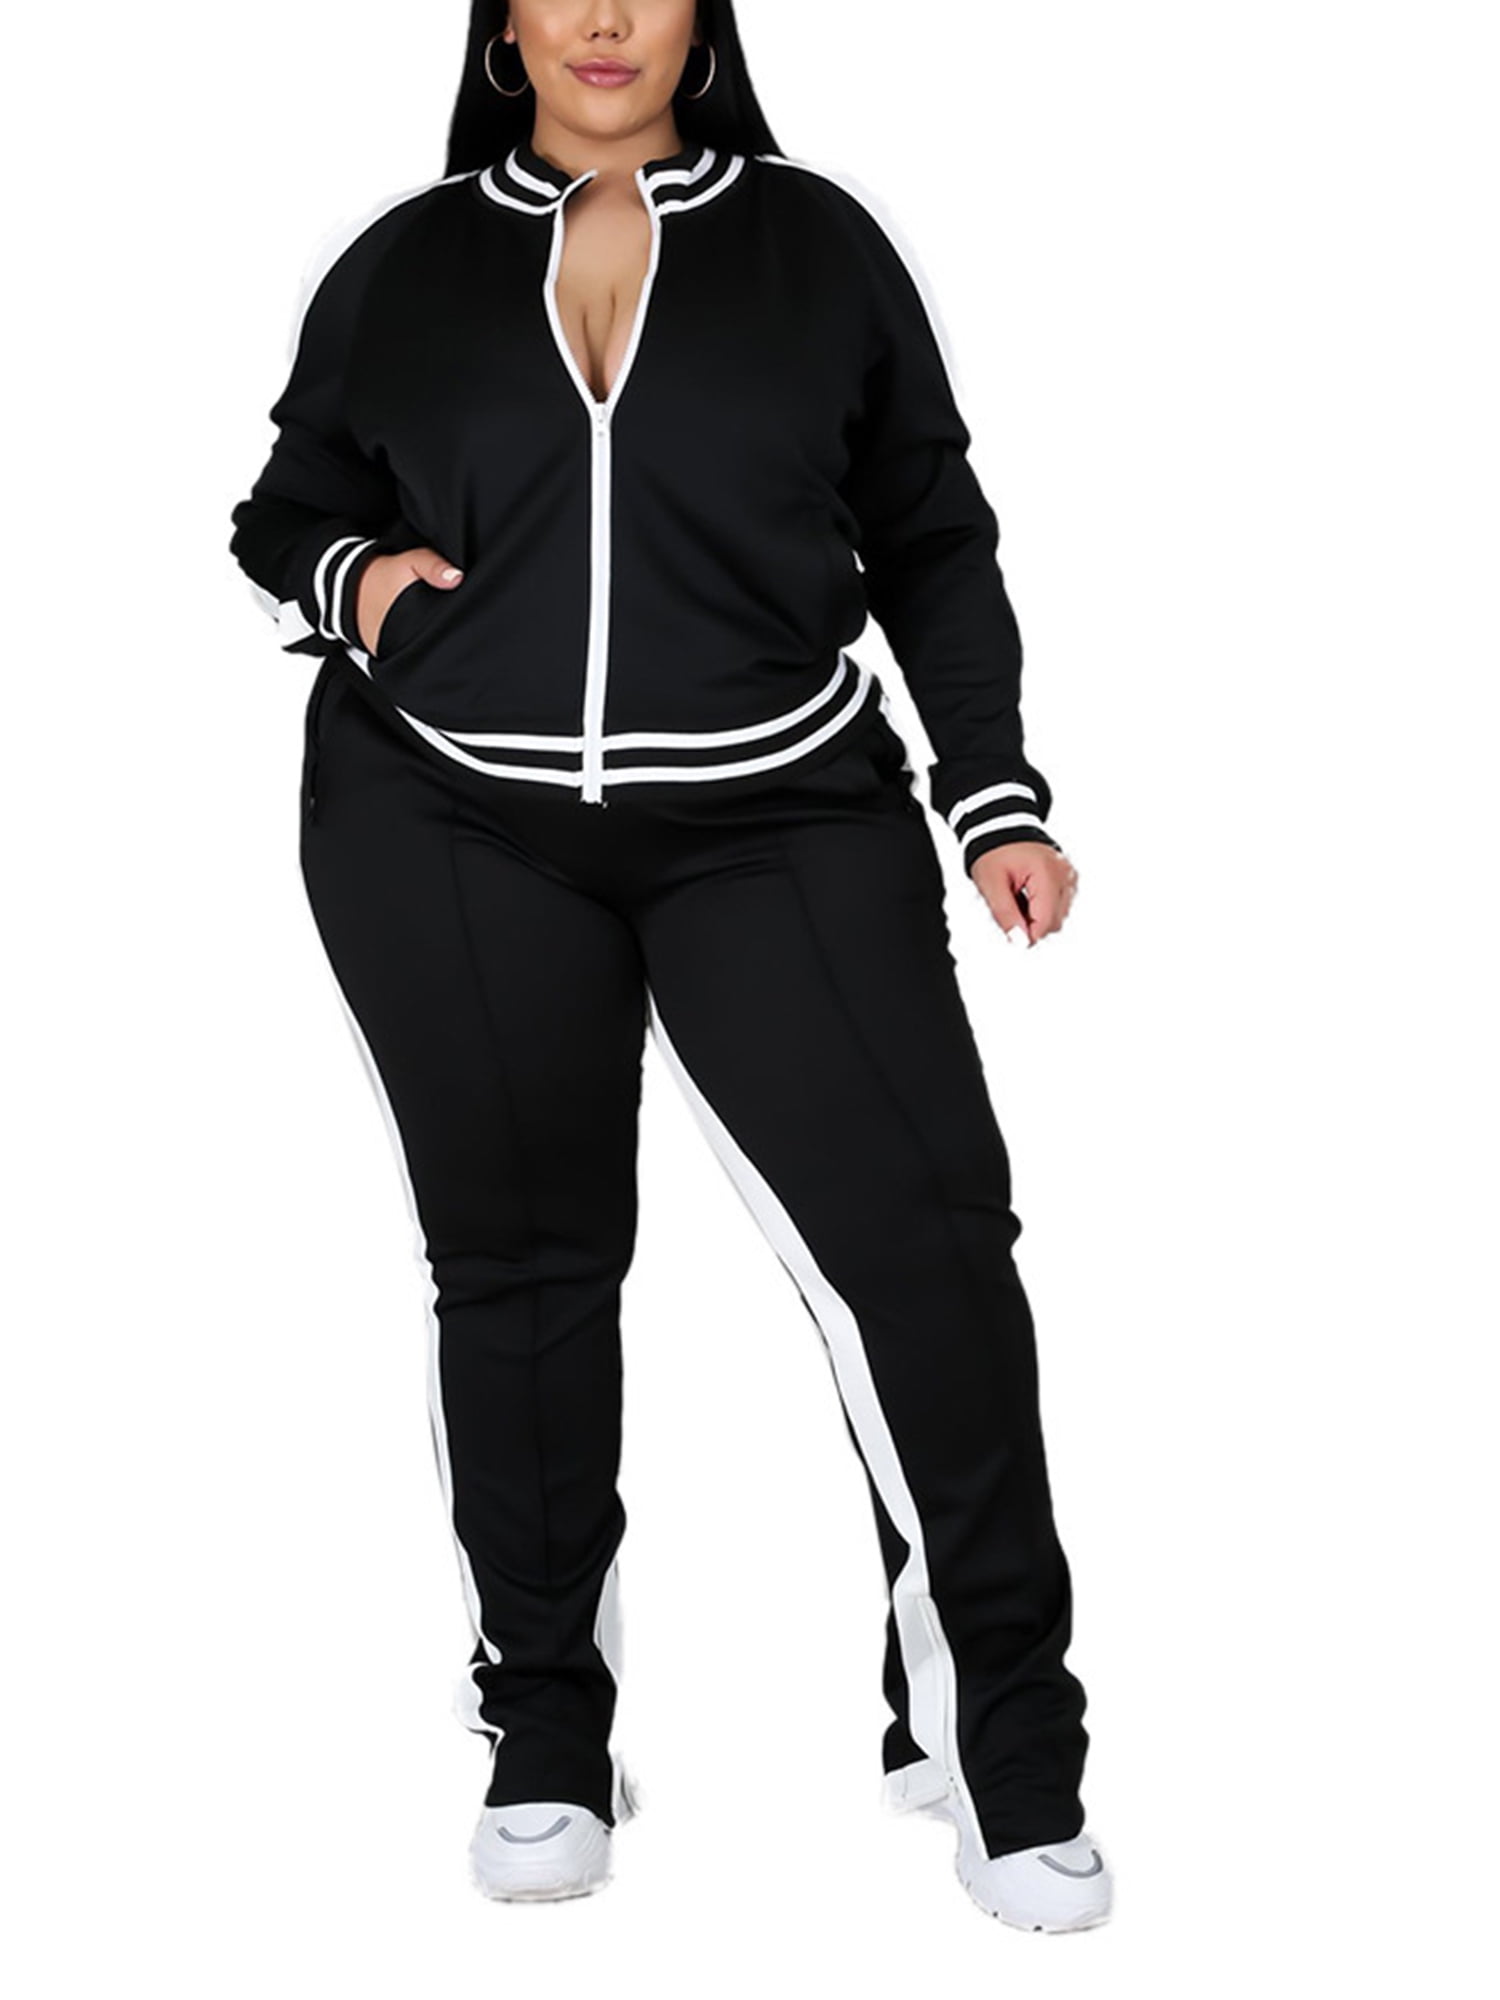 FANNYC 2 Piece Set Women's Track Suit Set Velvet Sweatsuits Jogging  Sweatshirt & Sweatpants Sport Wear Outfits Activewear - Walmart.com